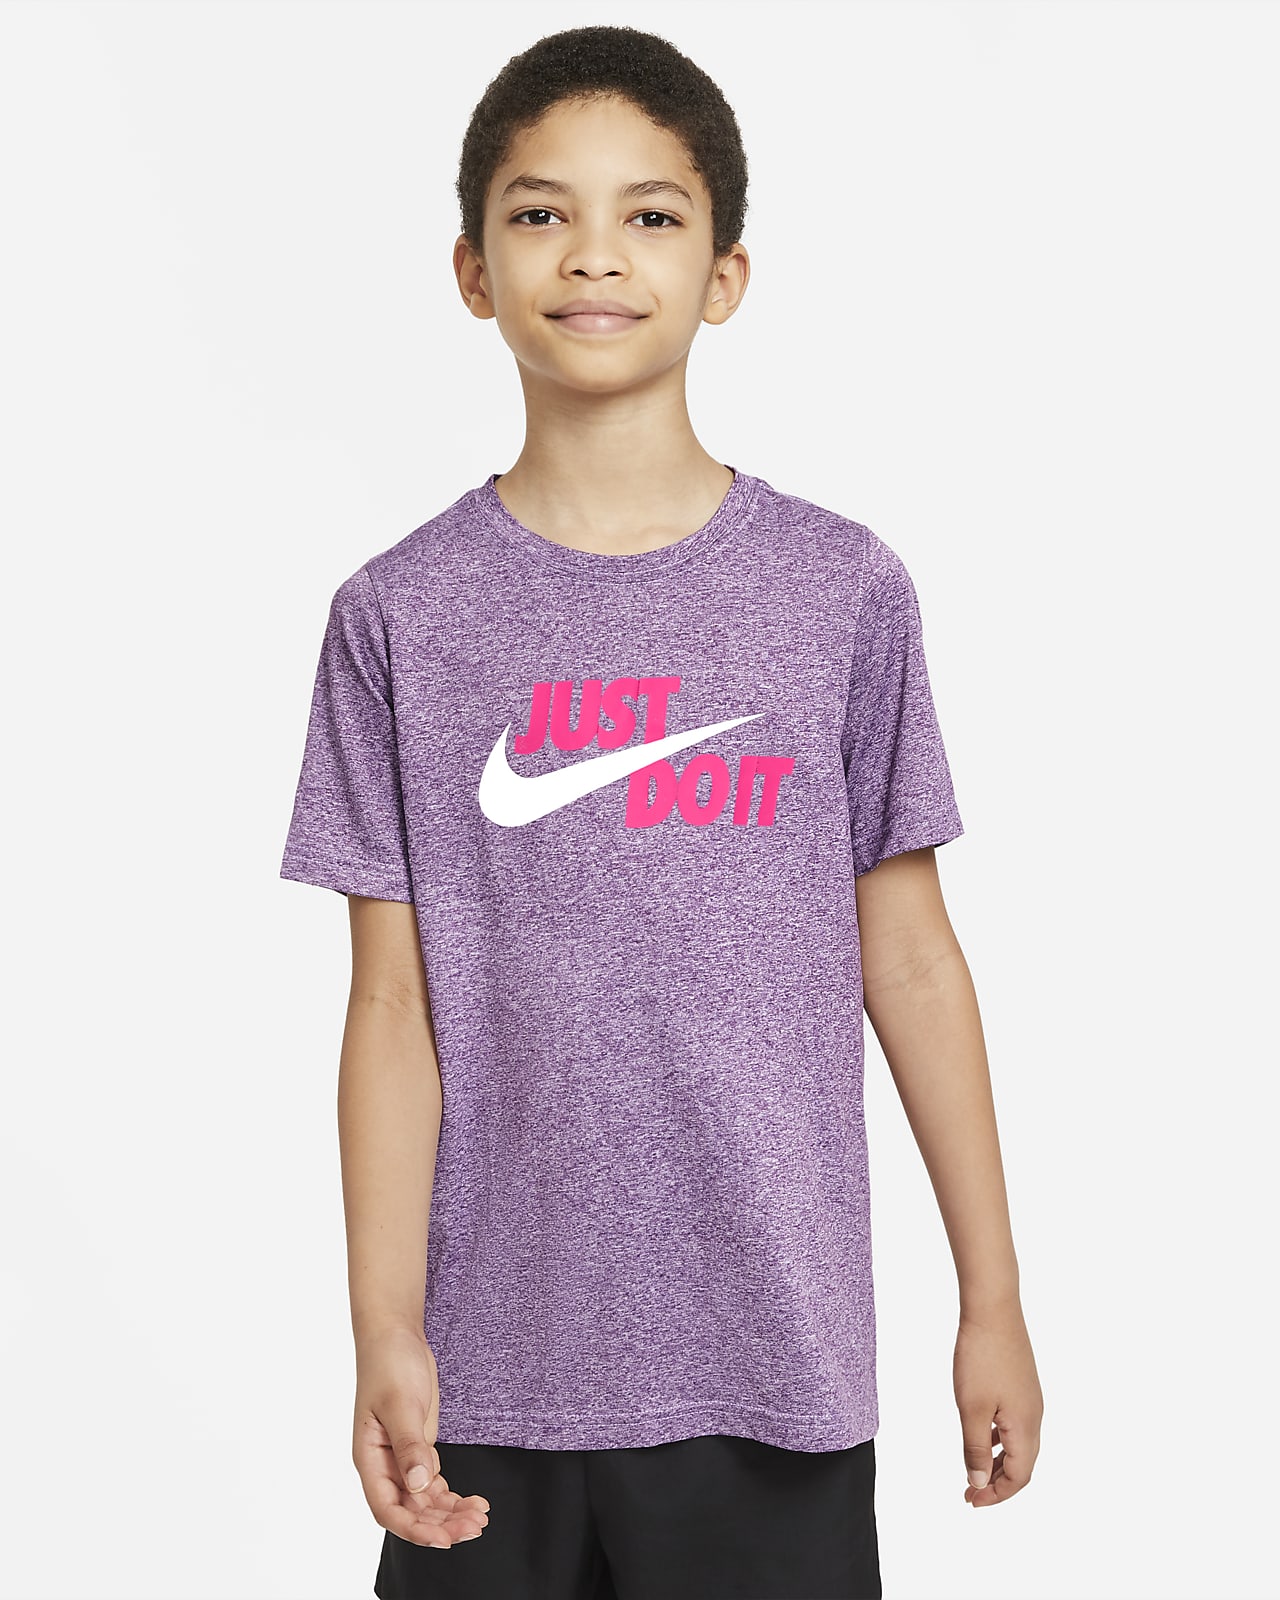 boys purple nike shirt